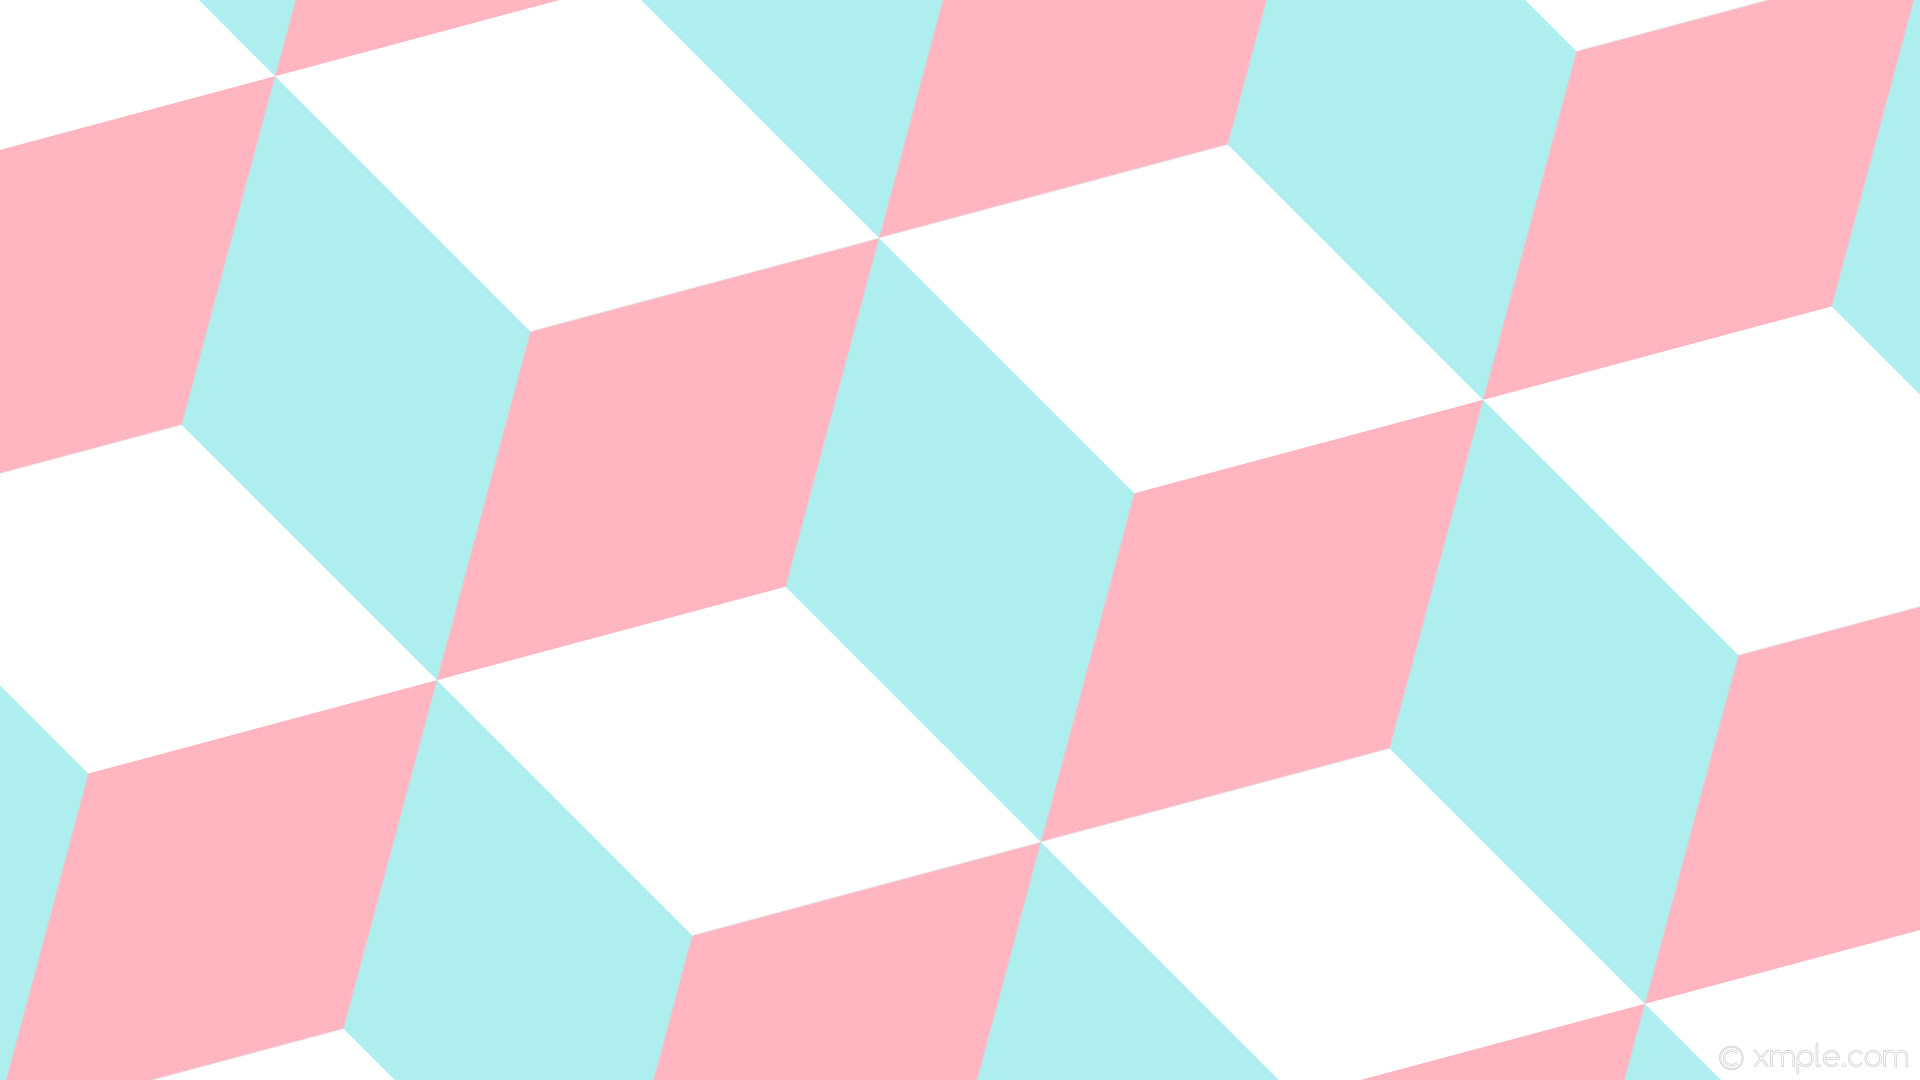 1920x1080 wallpaper 3d cubes blue white pink pale turquoise light pink #afeeee  #ffb6c1 #ffffff